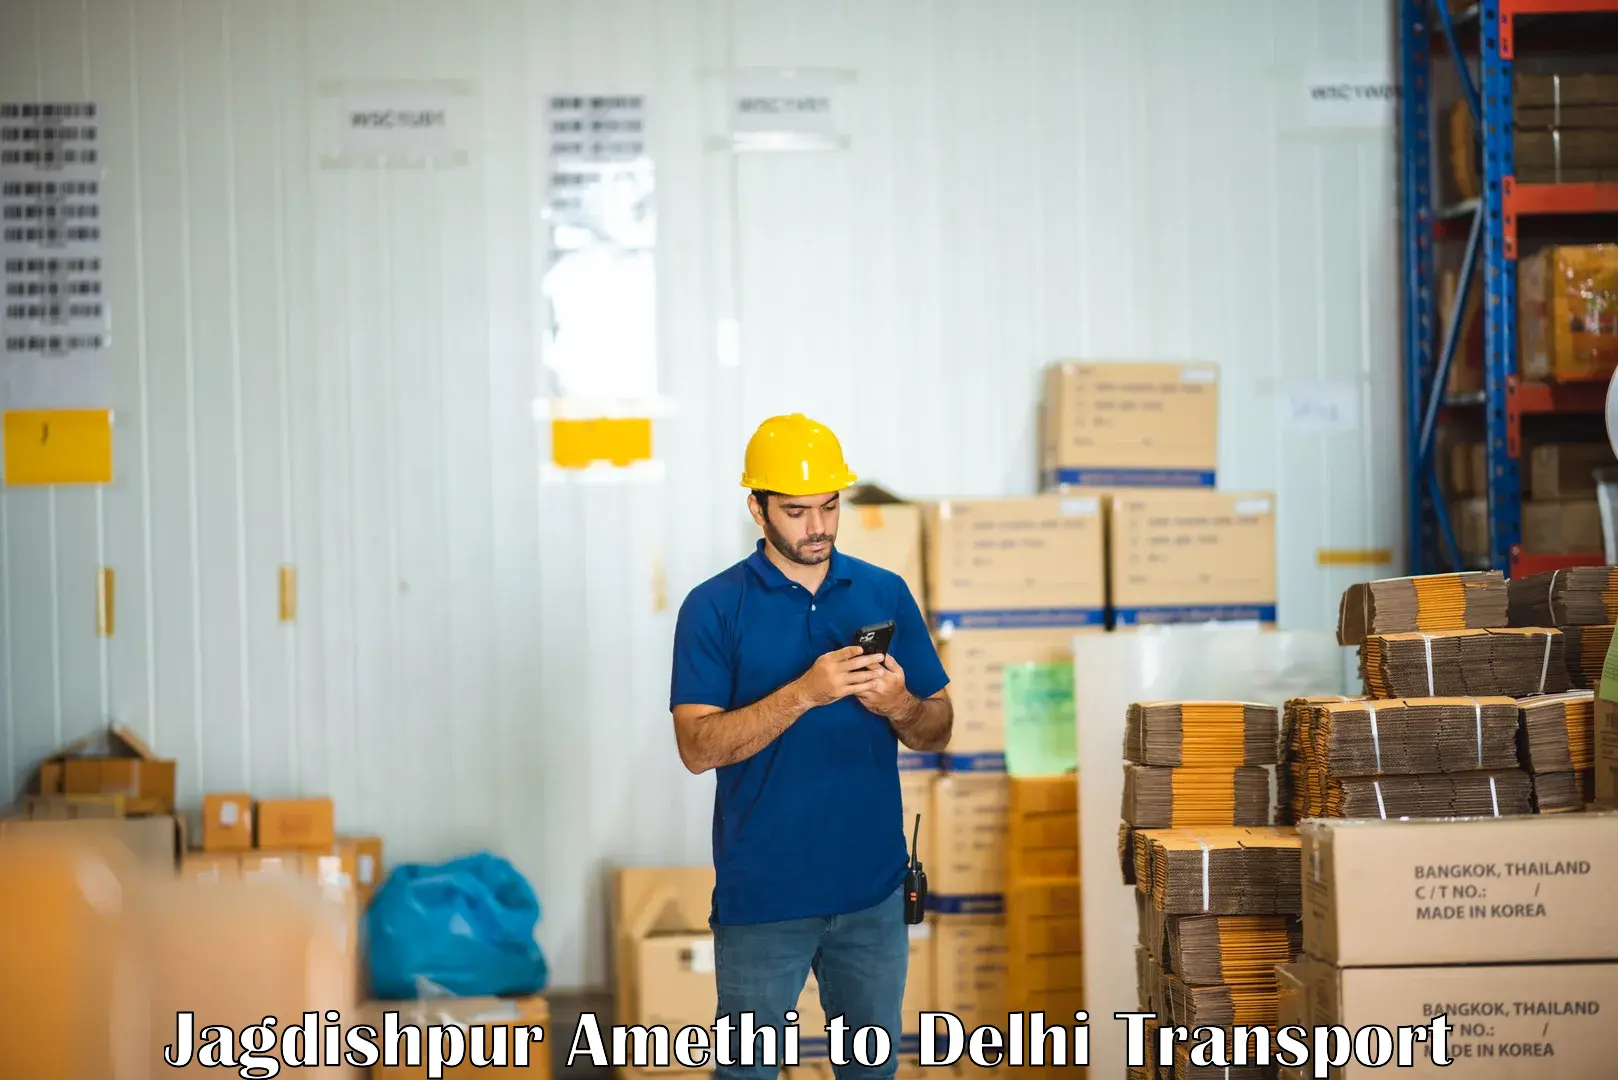 Truck transport companies in India Jagdishpur Amethi to Delhi